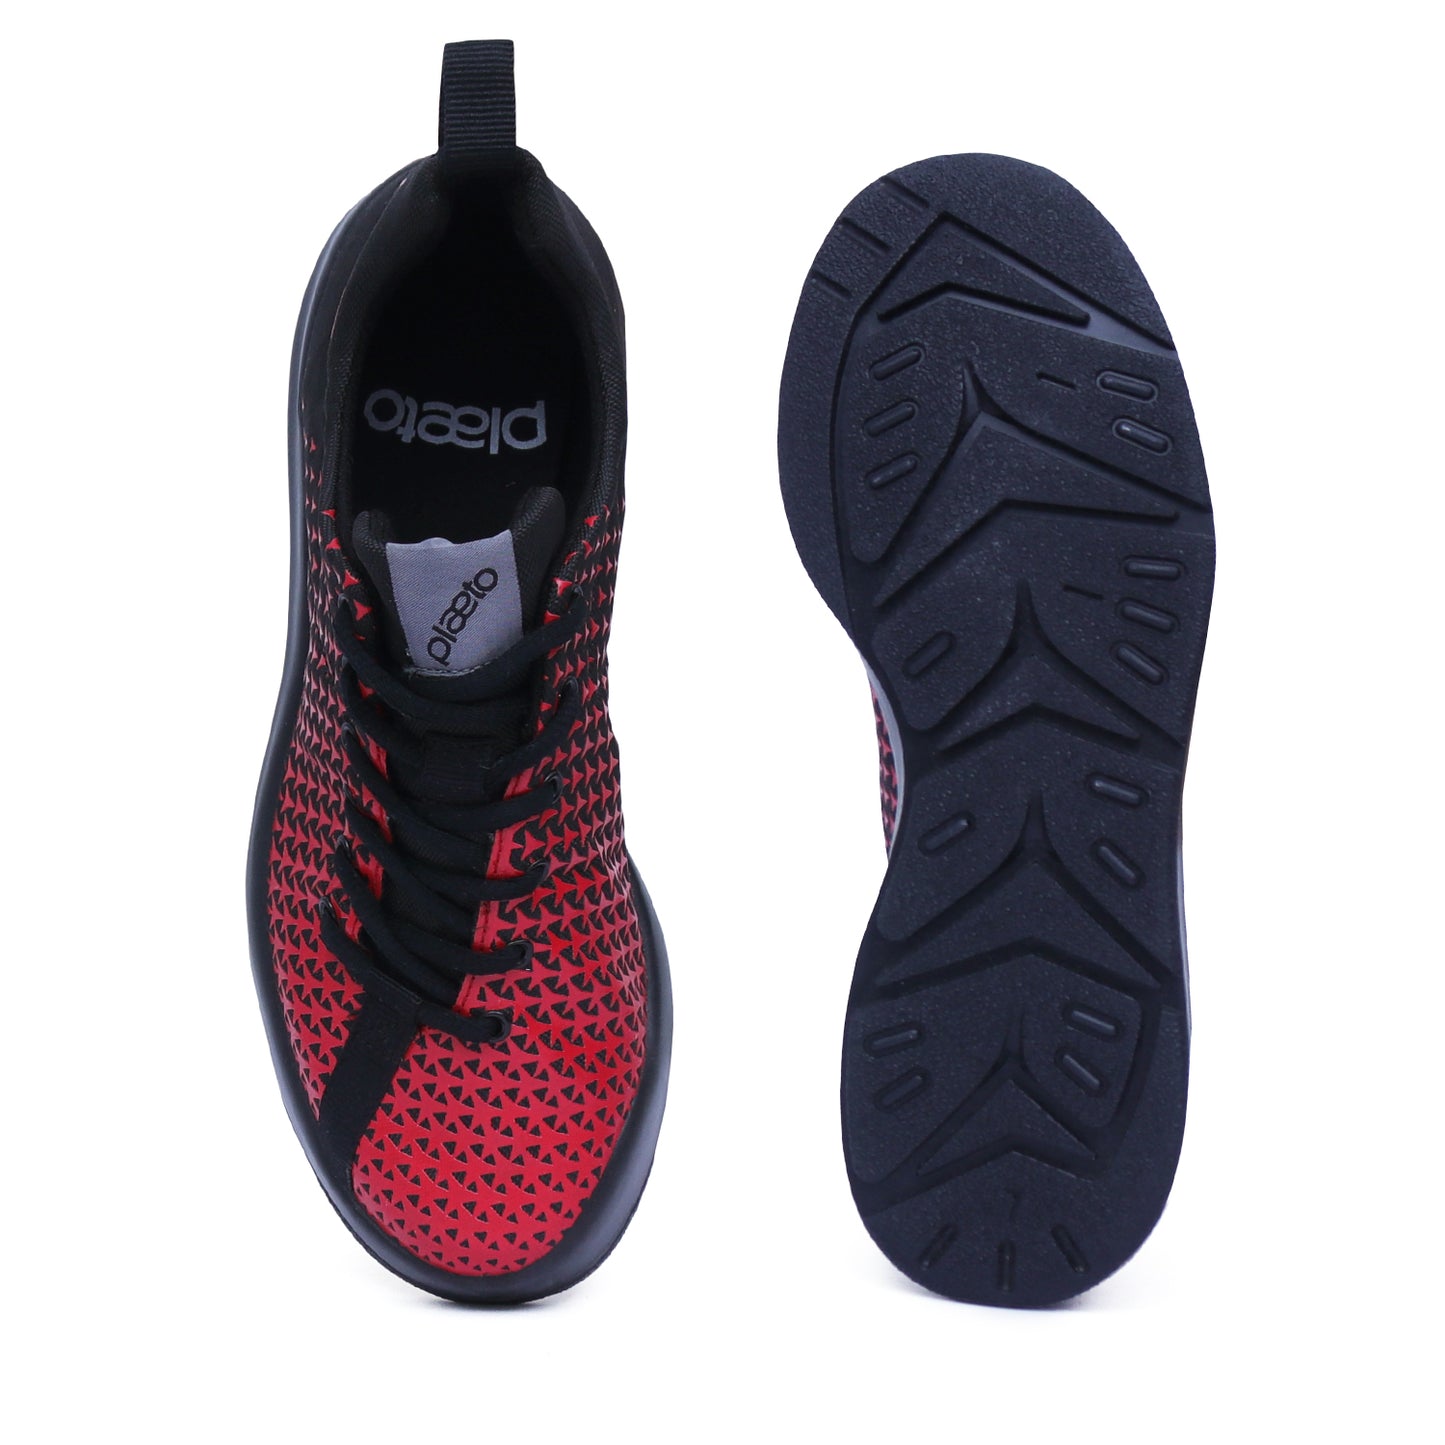 Starblast Women's Sports Shoes - Black / Red